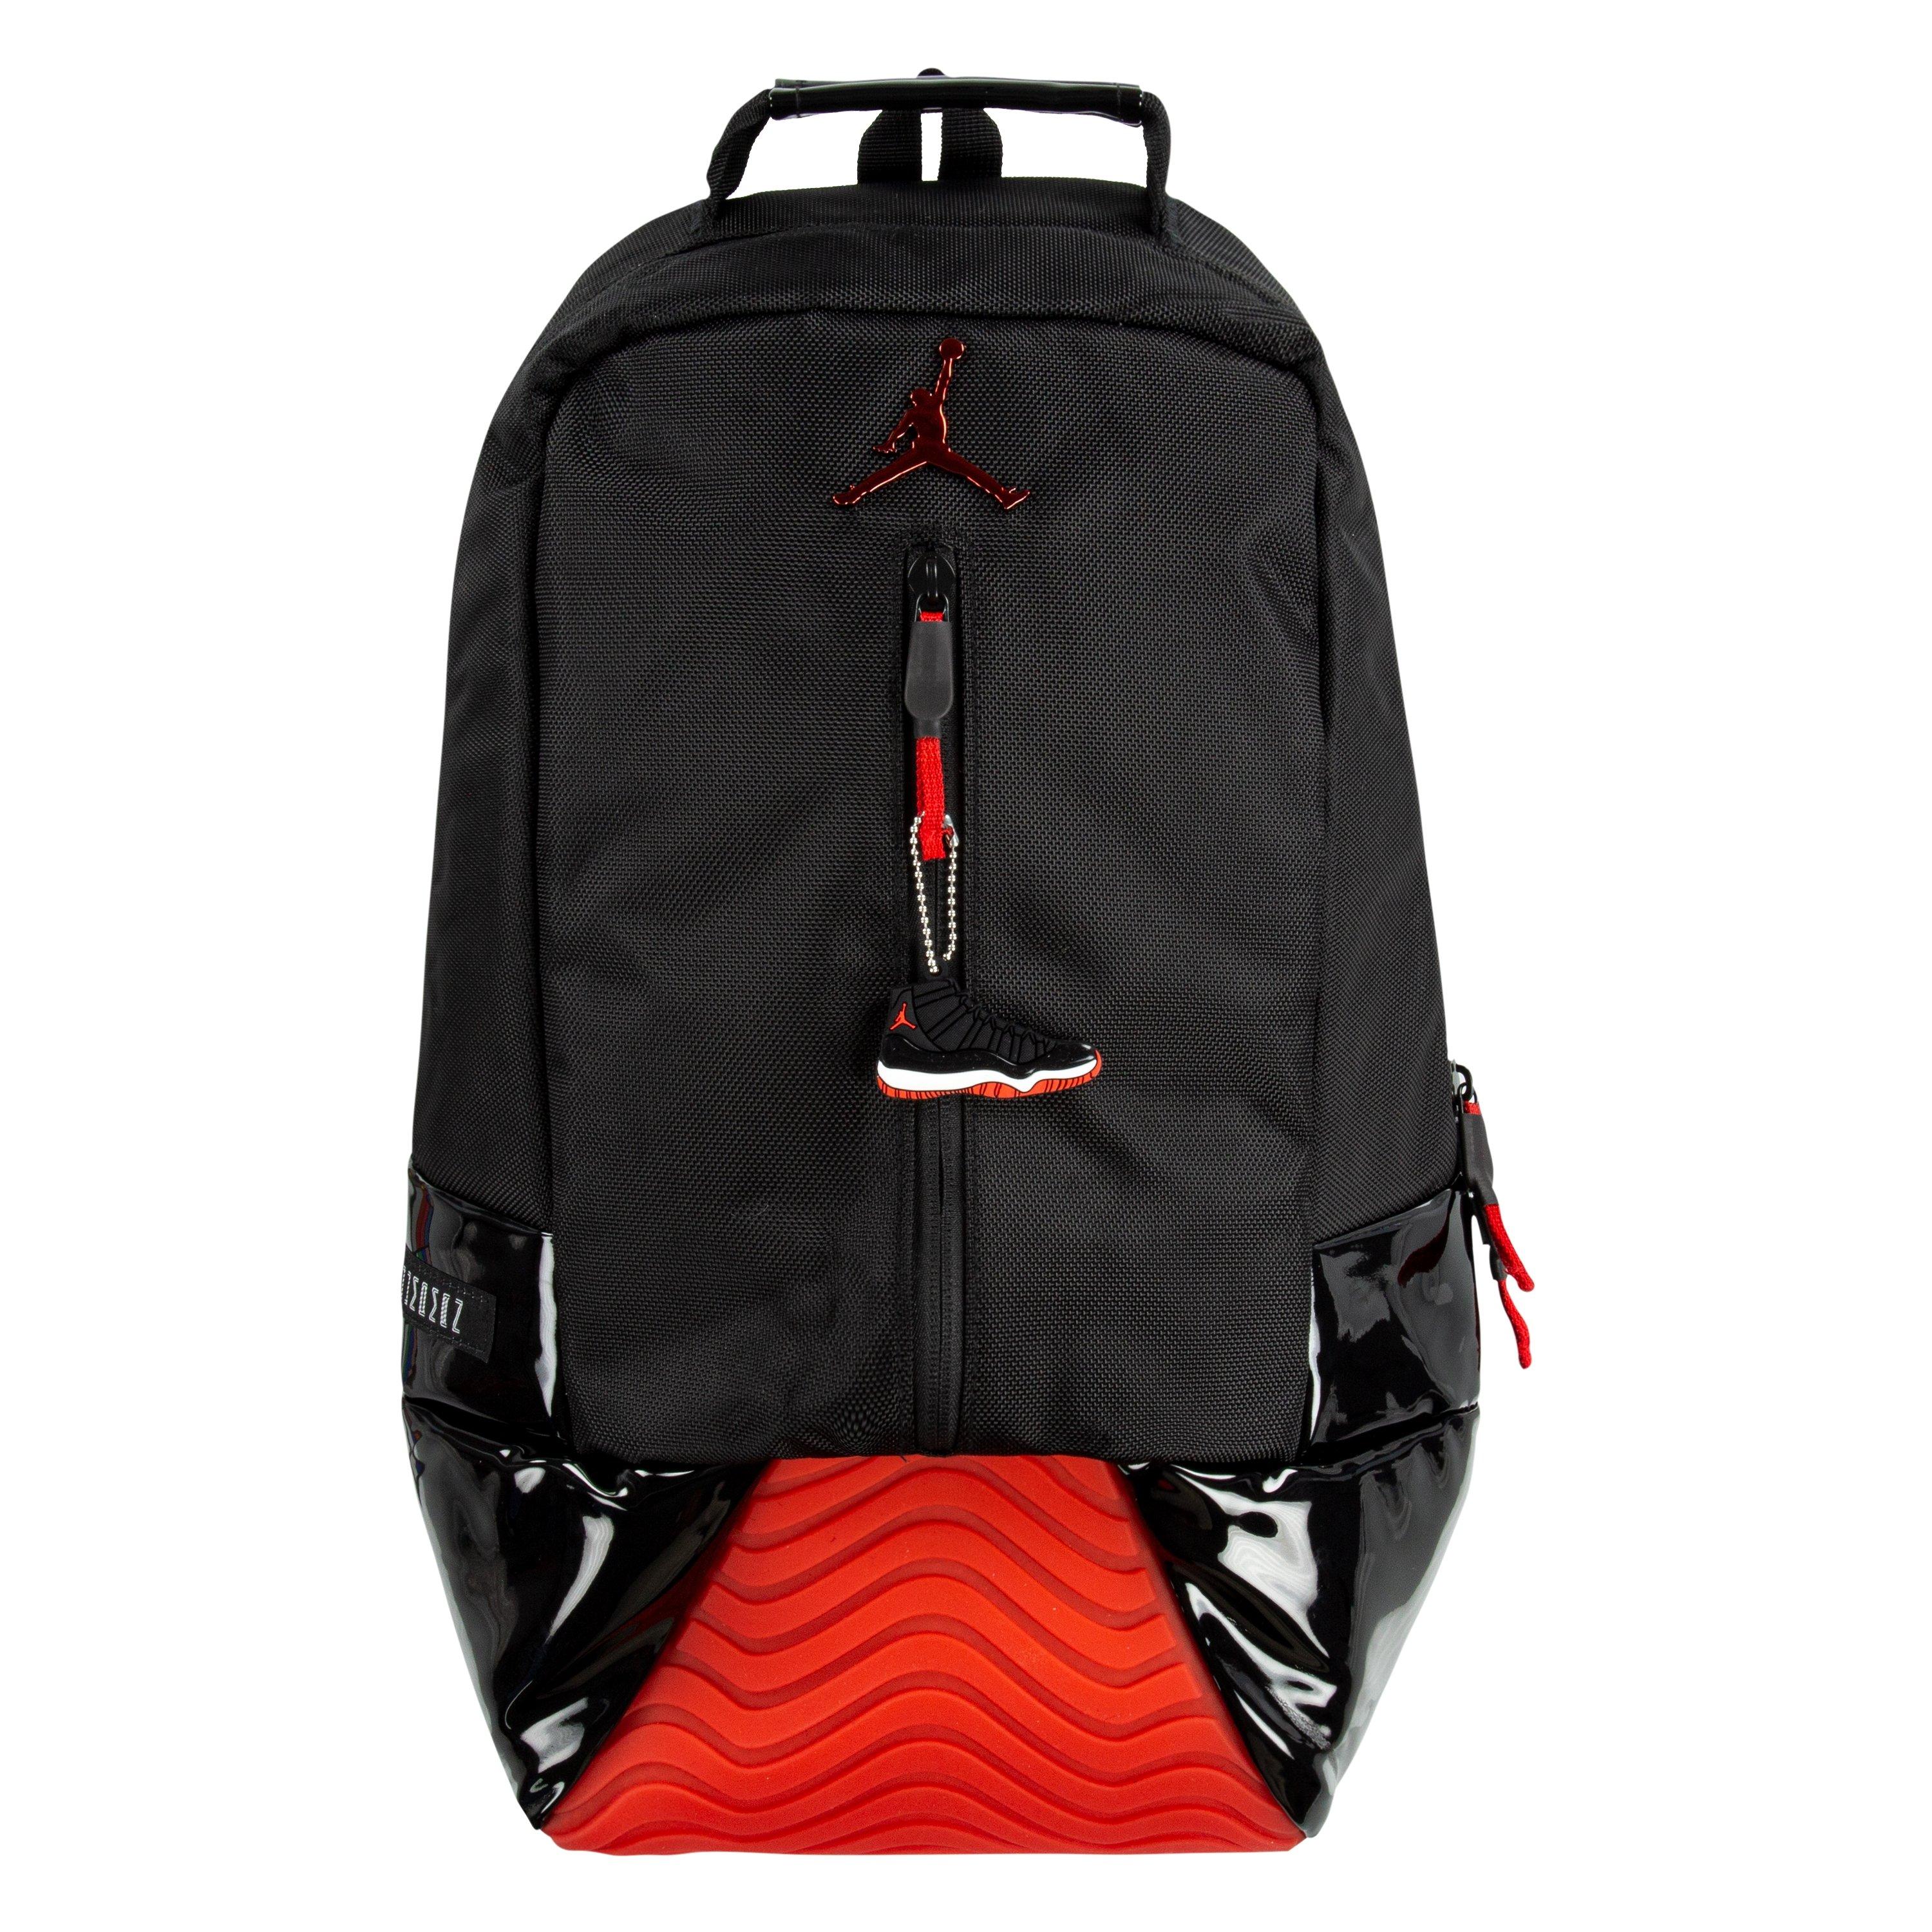 bred 11 backpack